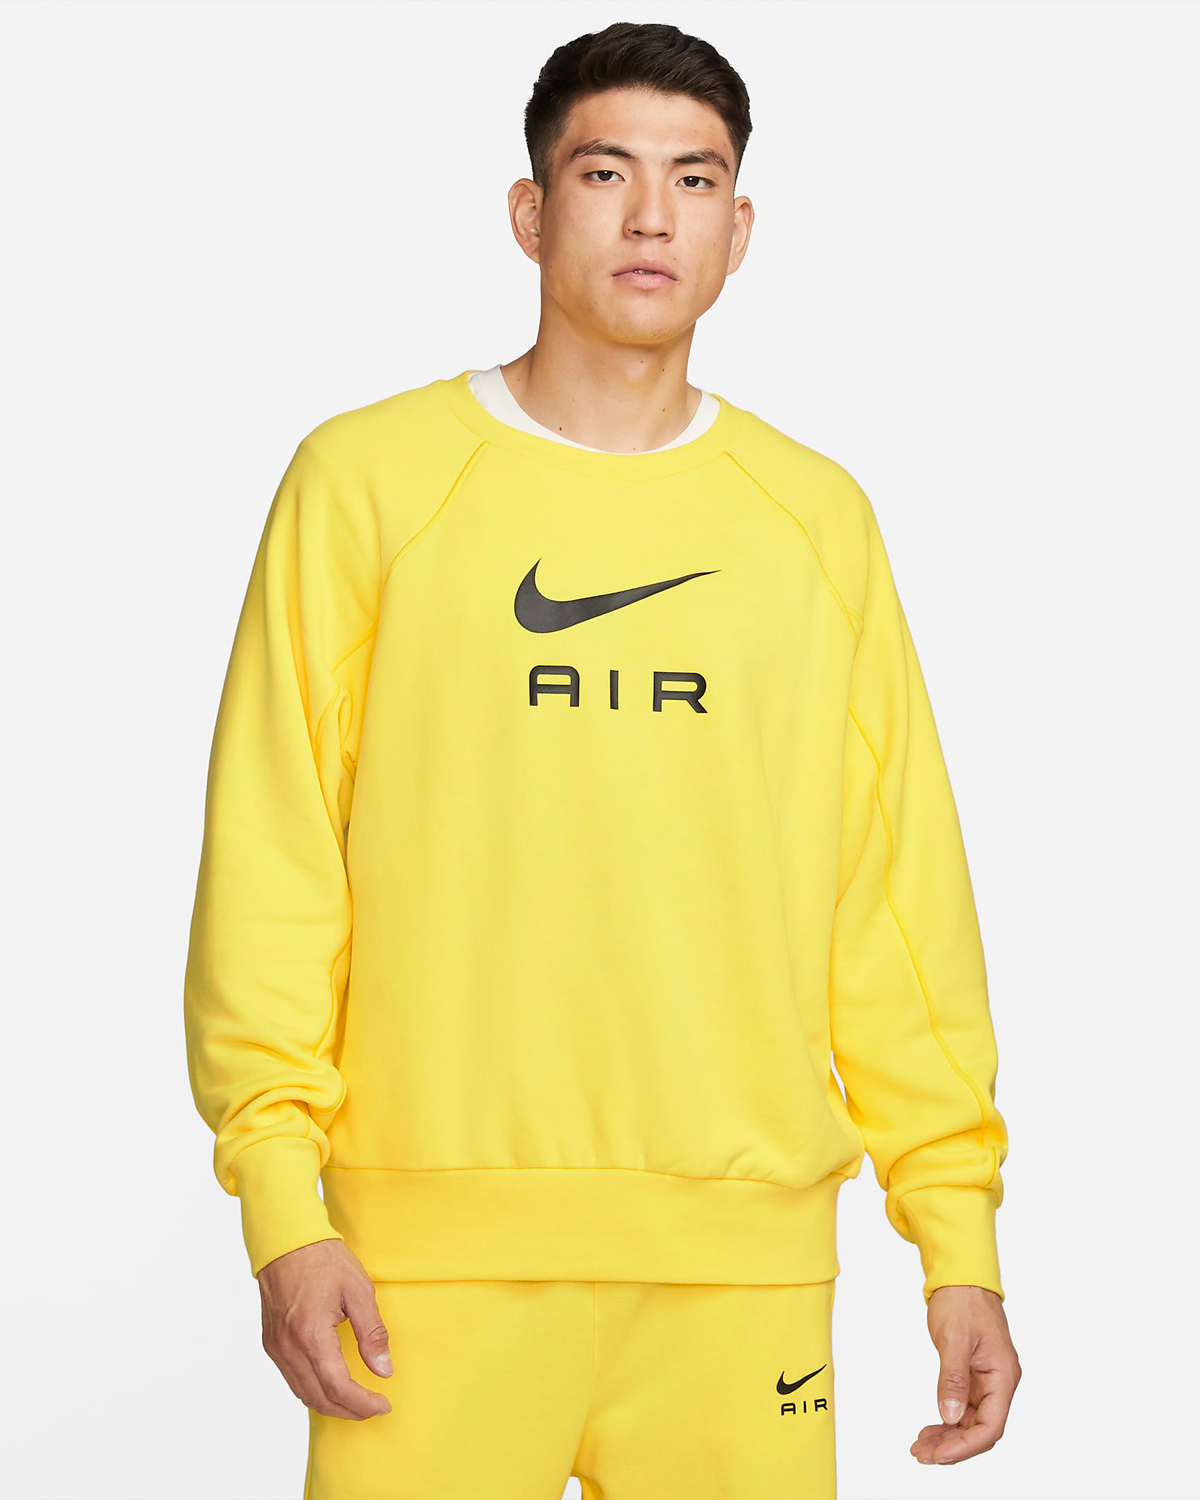 Nike-Air-Crew-Sweatshirt-Yellow-Strike